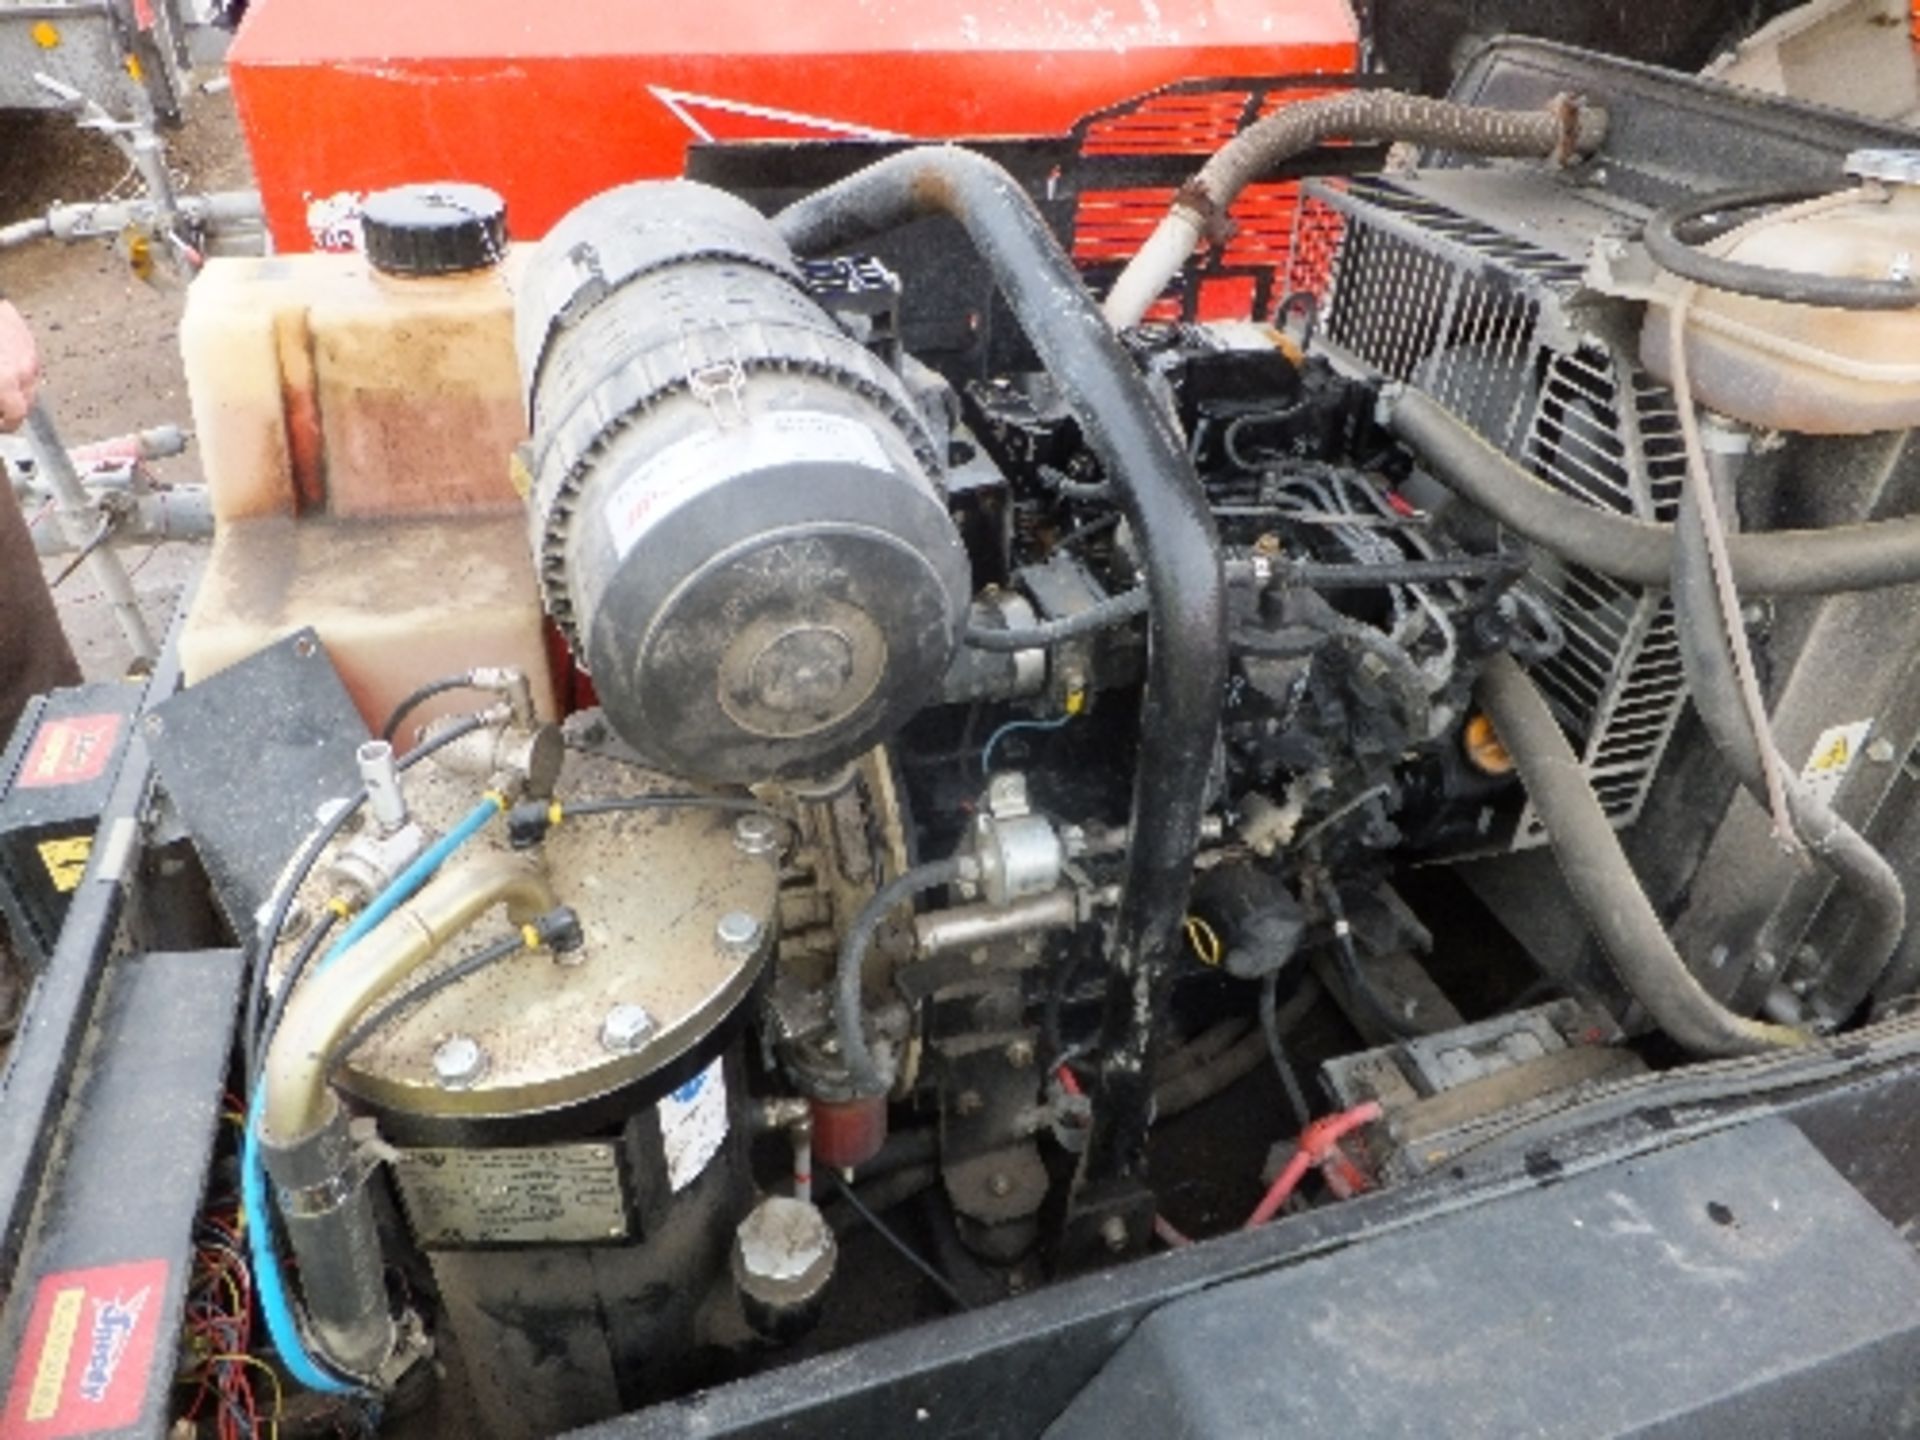 Doosan 7/31e compressor (2011) 1225 hrs  - electrical fault - Image 2 of 2